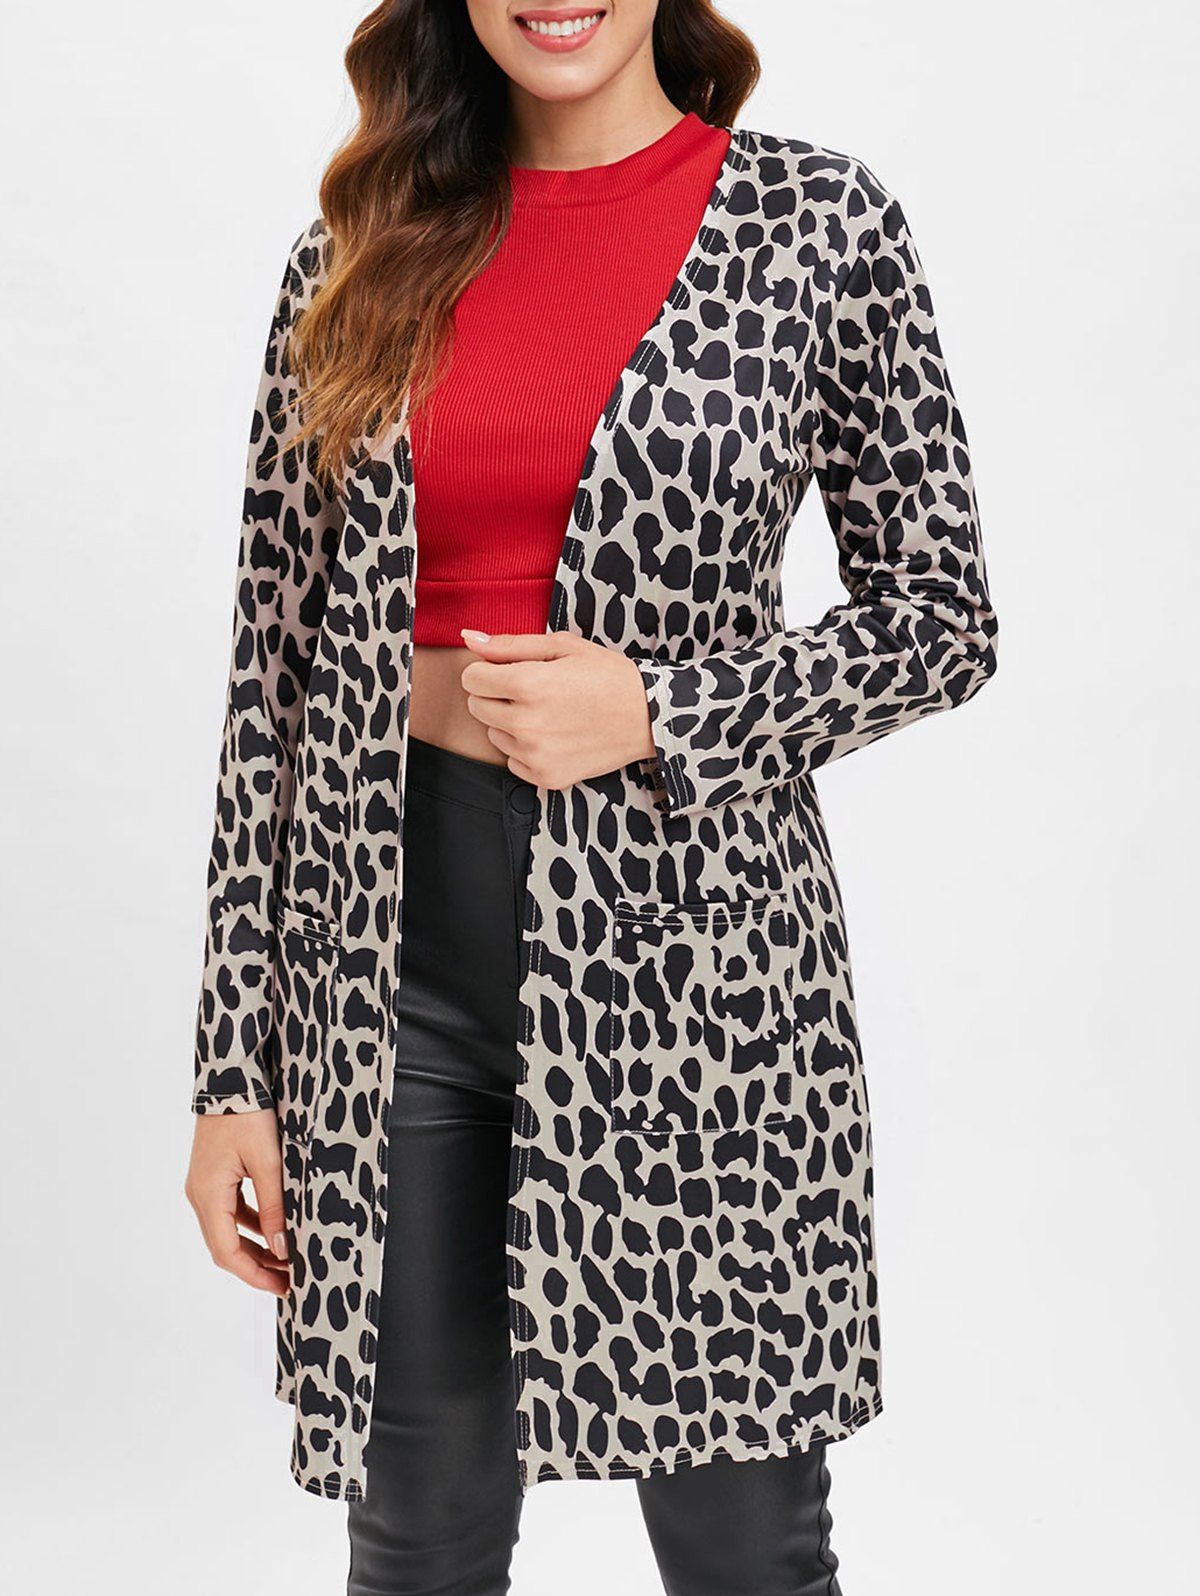 Leopard Open Front Long Coat with Pockets - LEOPARD M